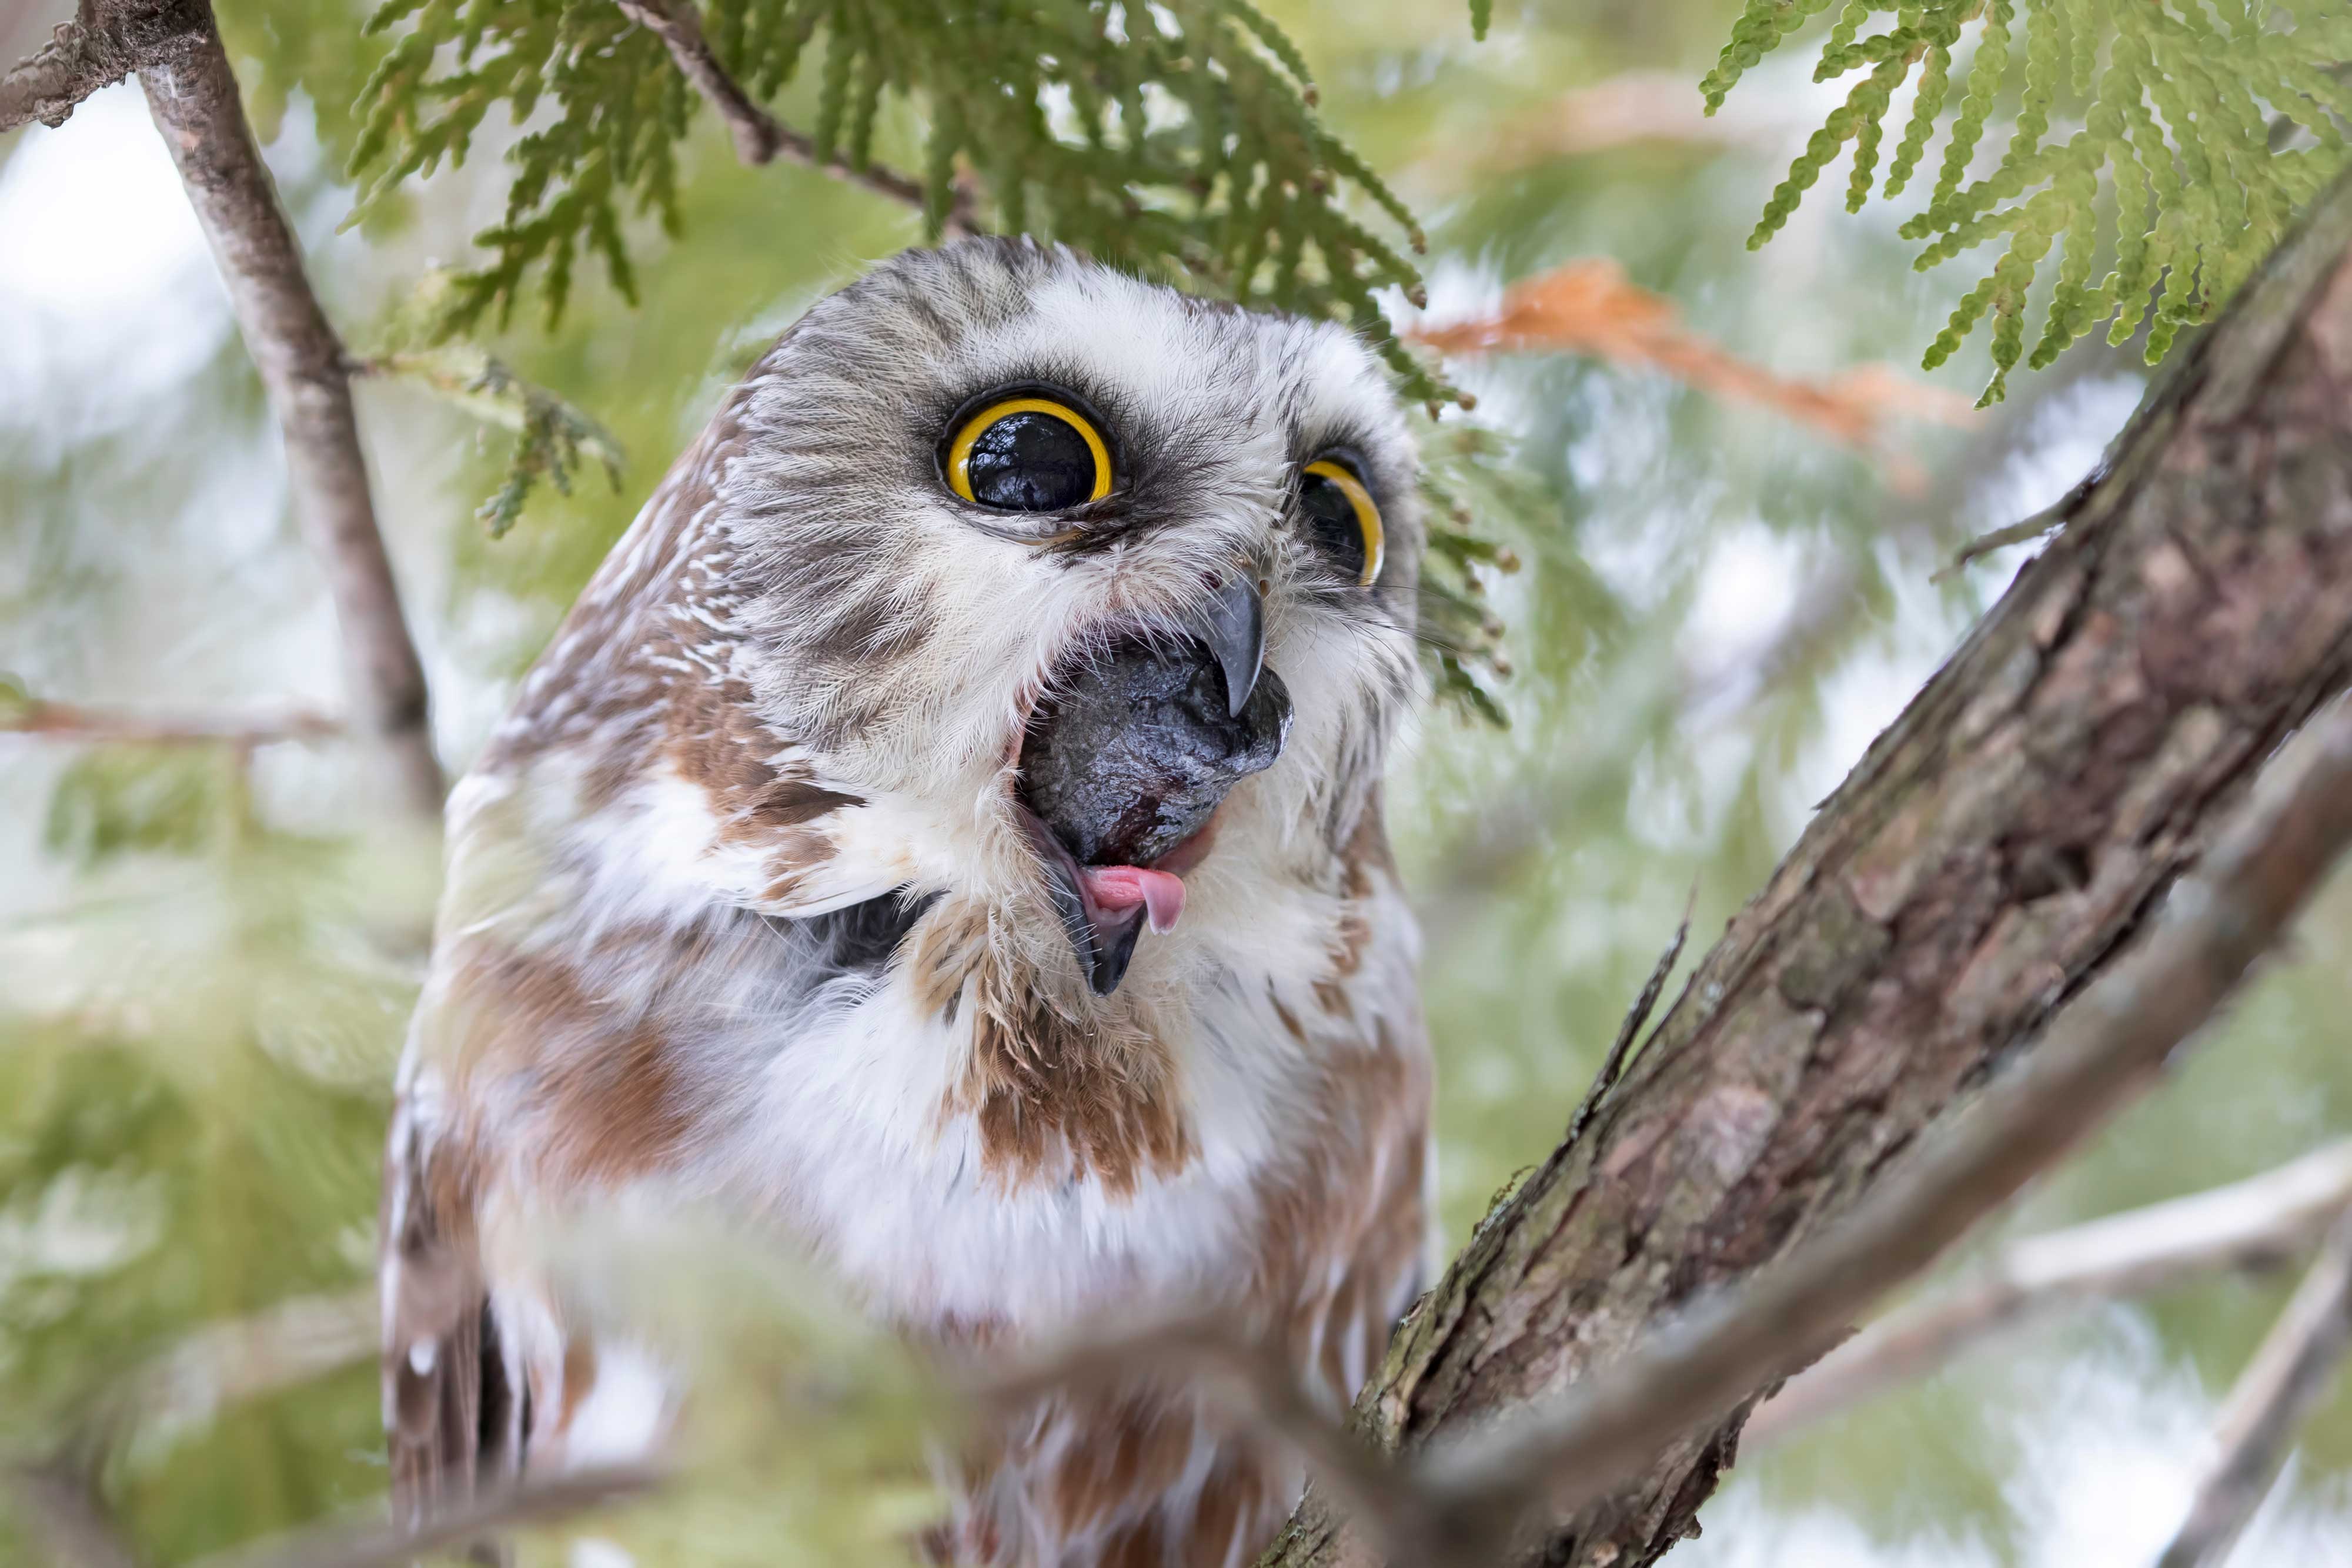 An owl regurgitating a pellet.